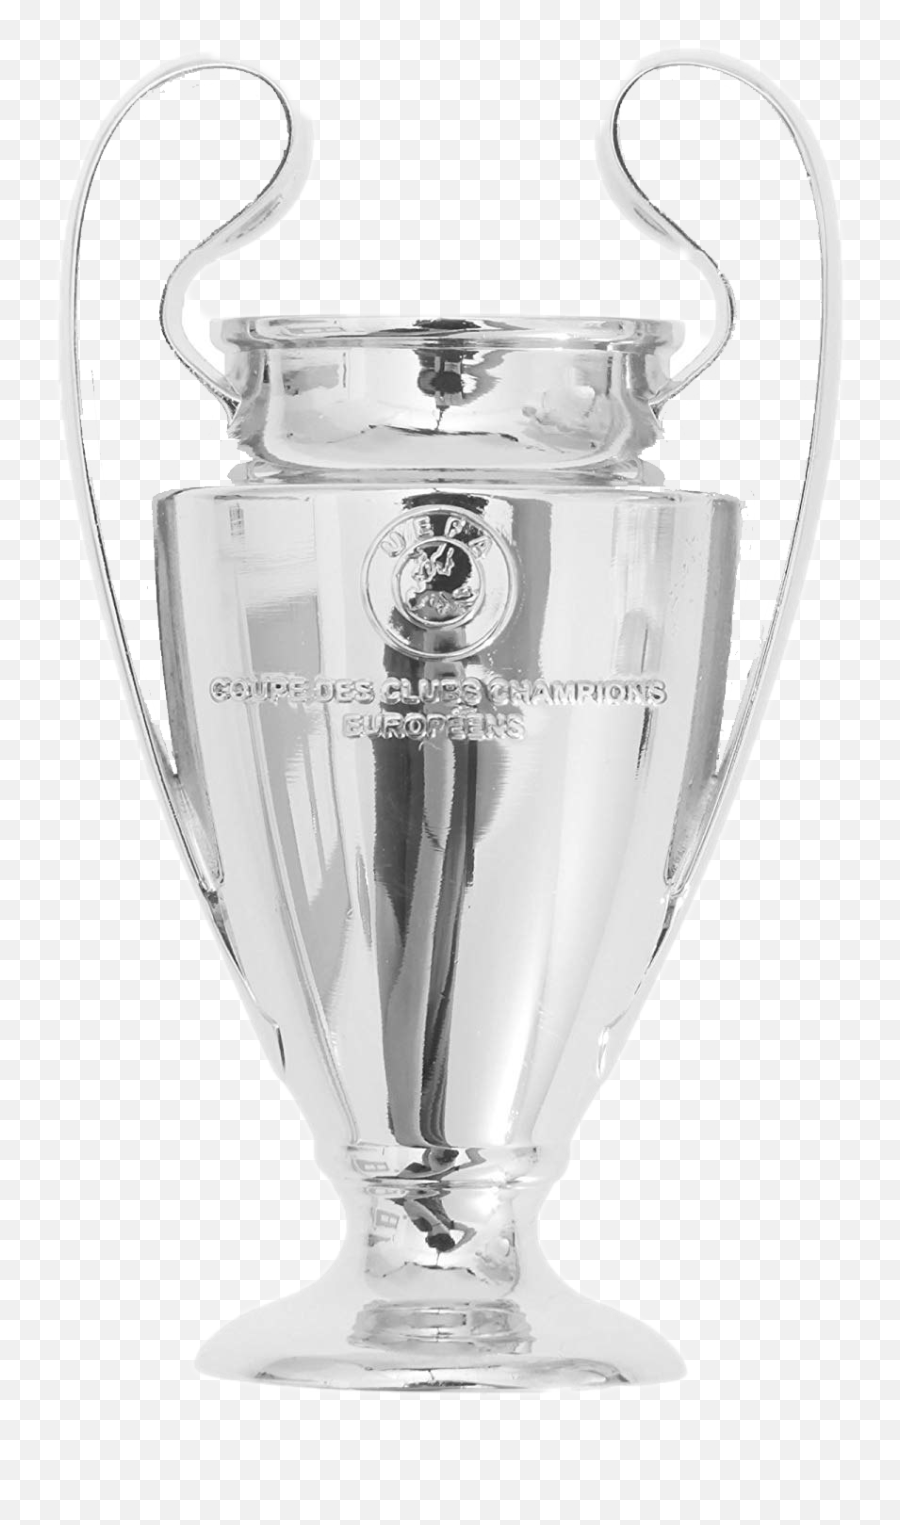 Uefa Champions League Trophy Png Image - Buy Uefa Champions League Trophy Emoji,Trophy Png